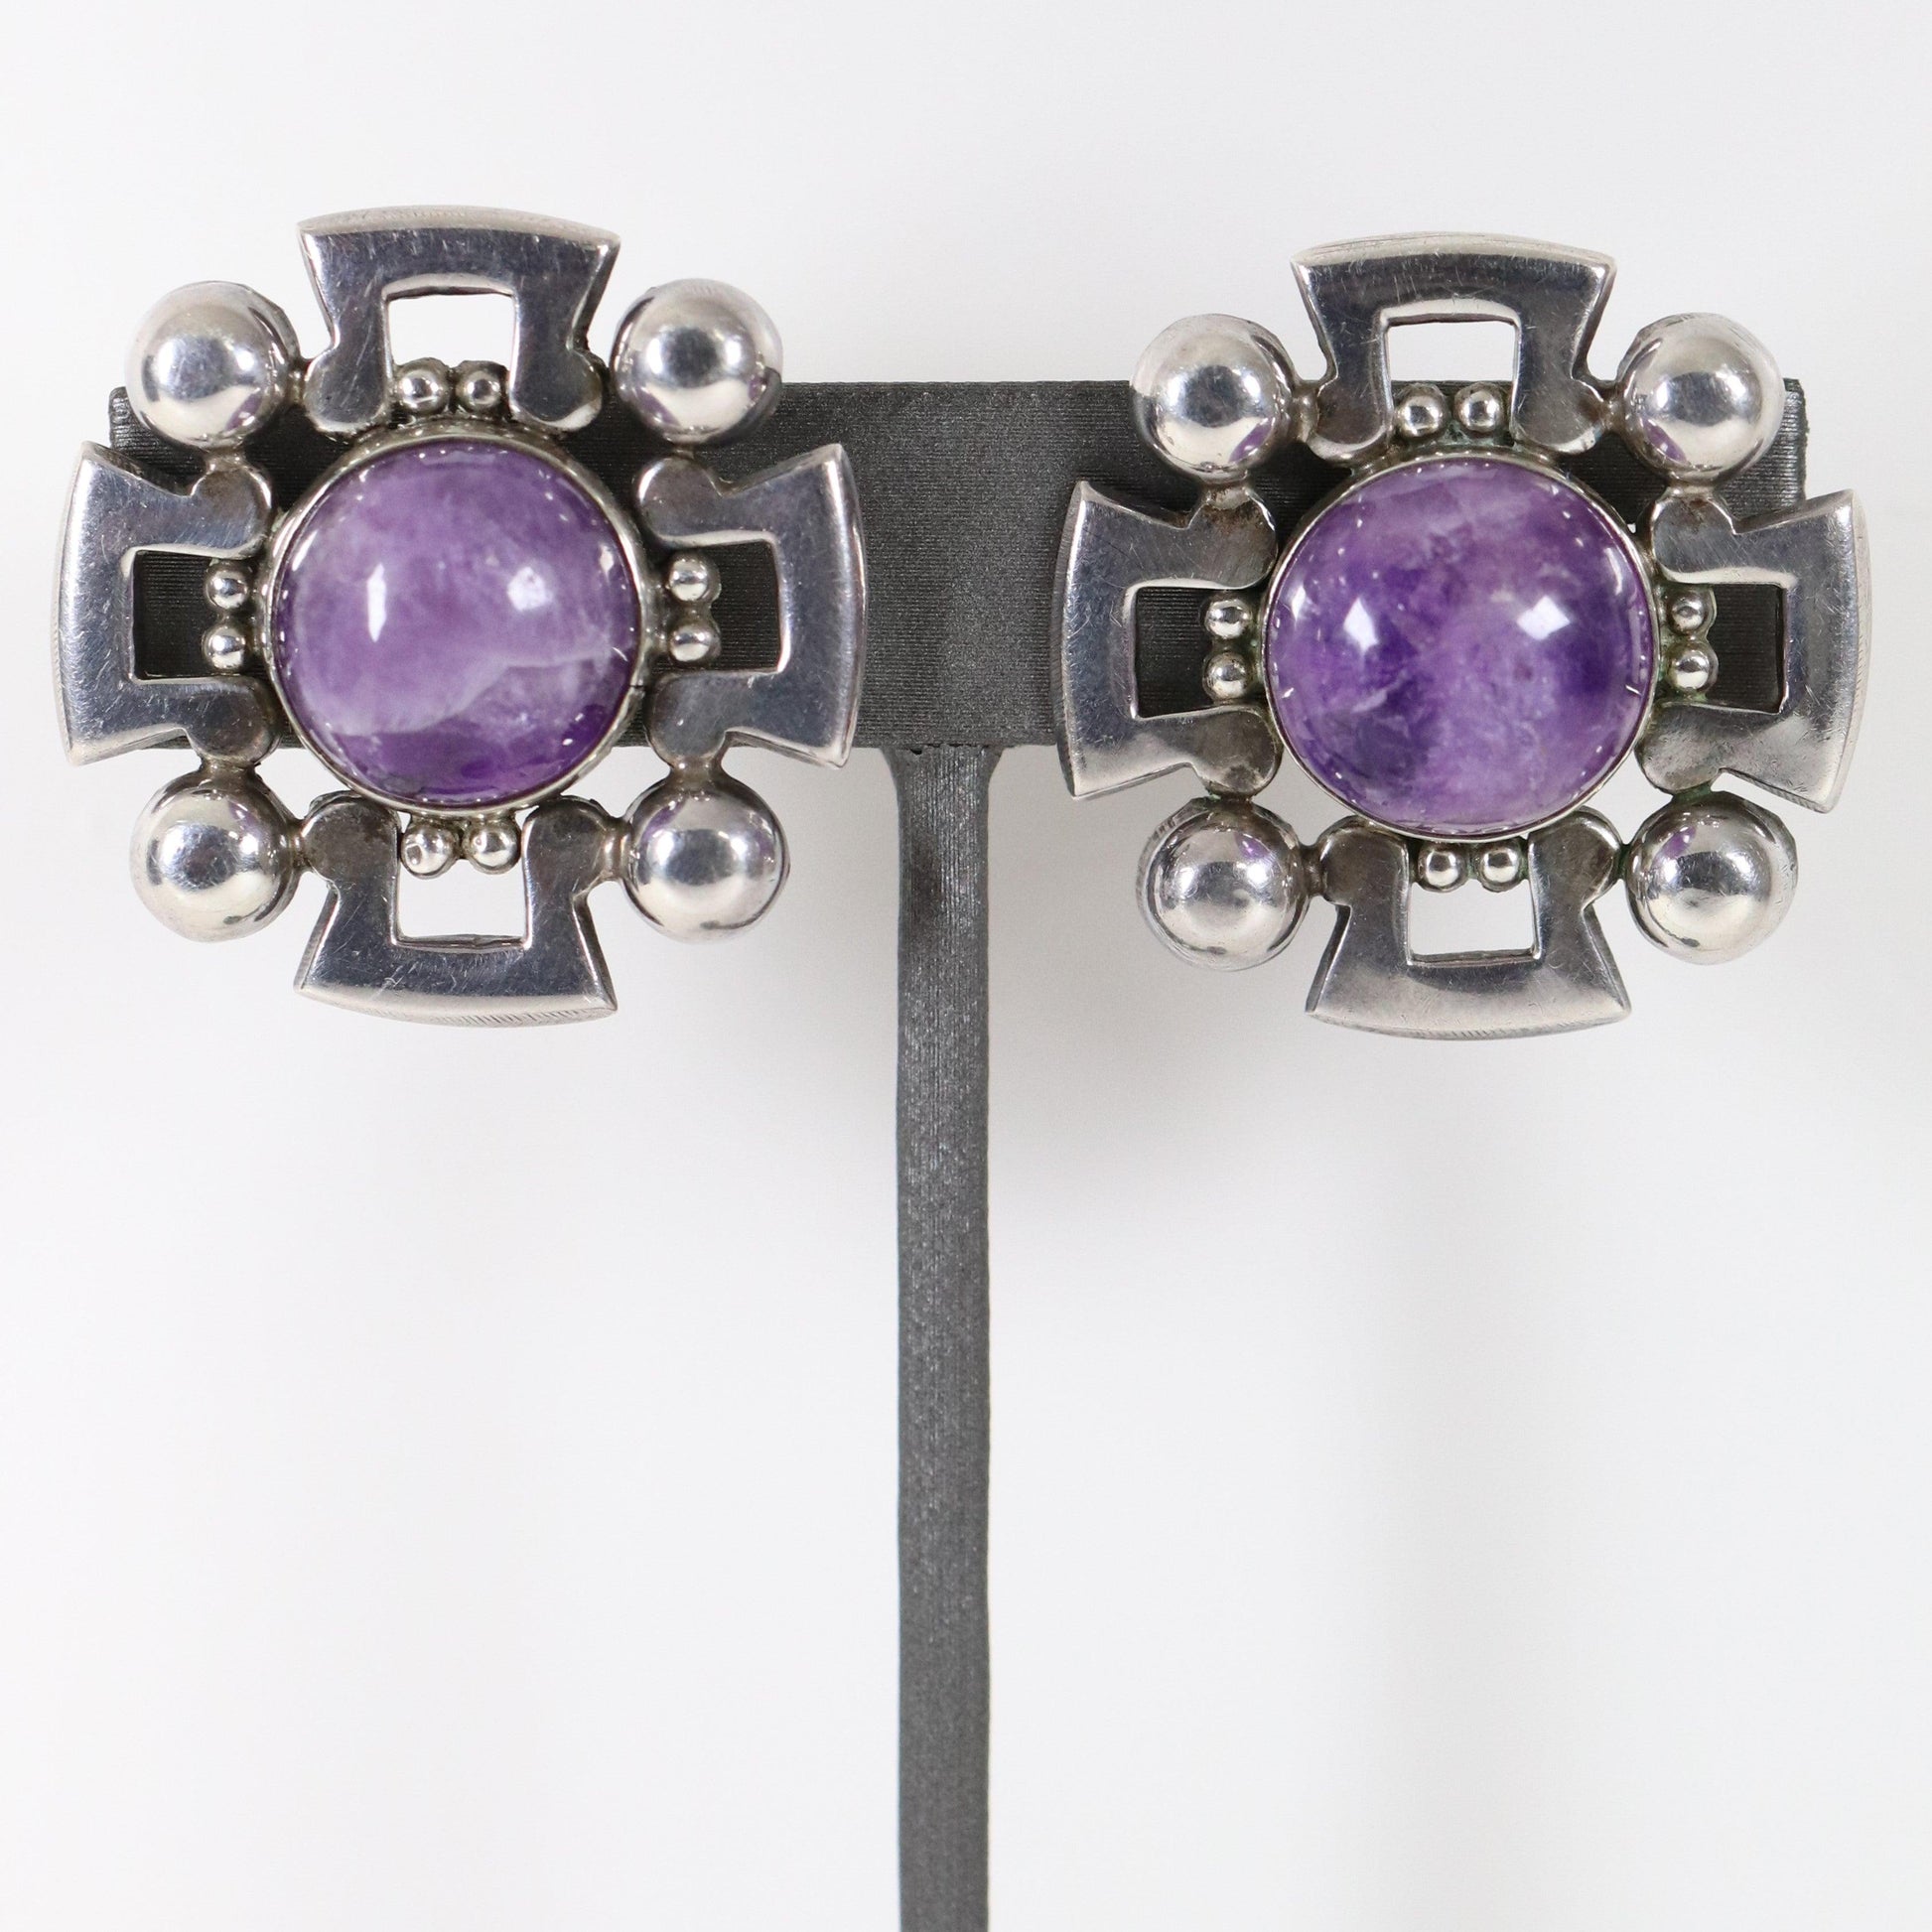 Vintage Fred Davis Taxco Jewelry | Bold Amethyst Brooch and Earring Set - Carmel Fine Silver Jewelry